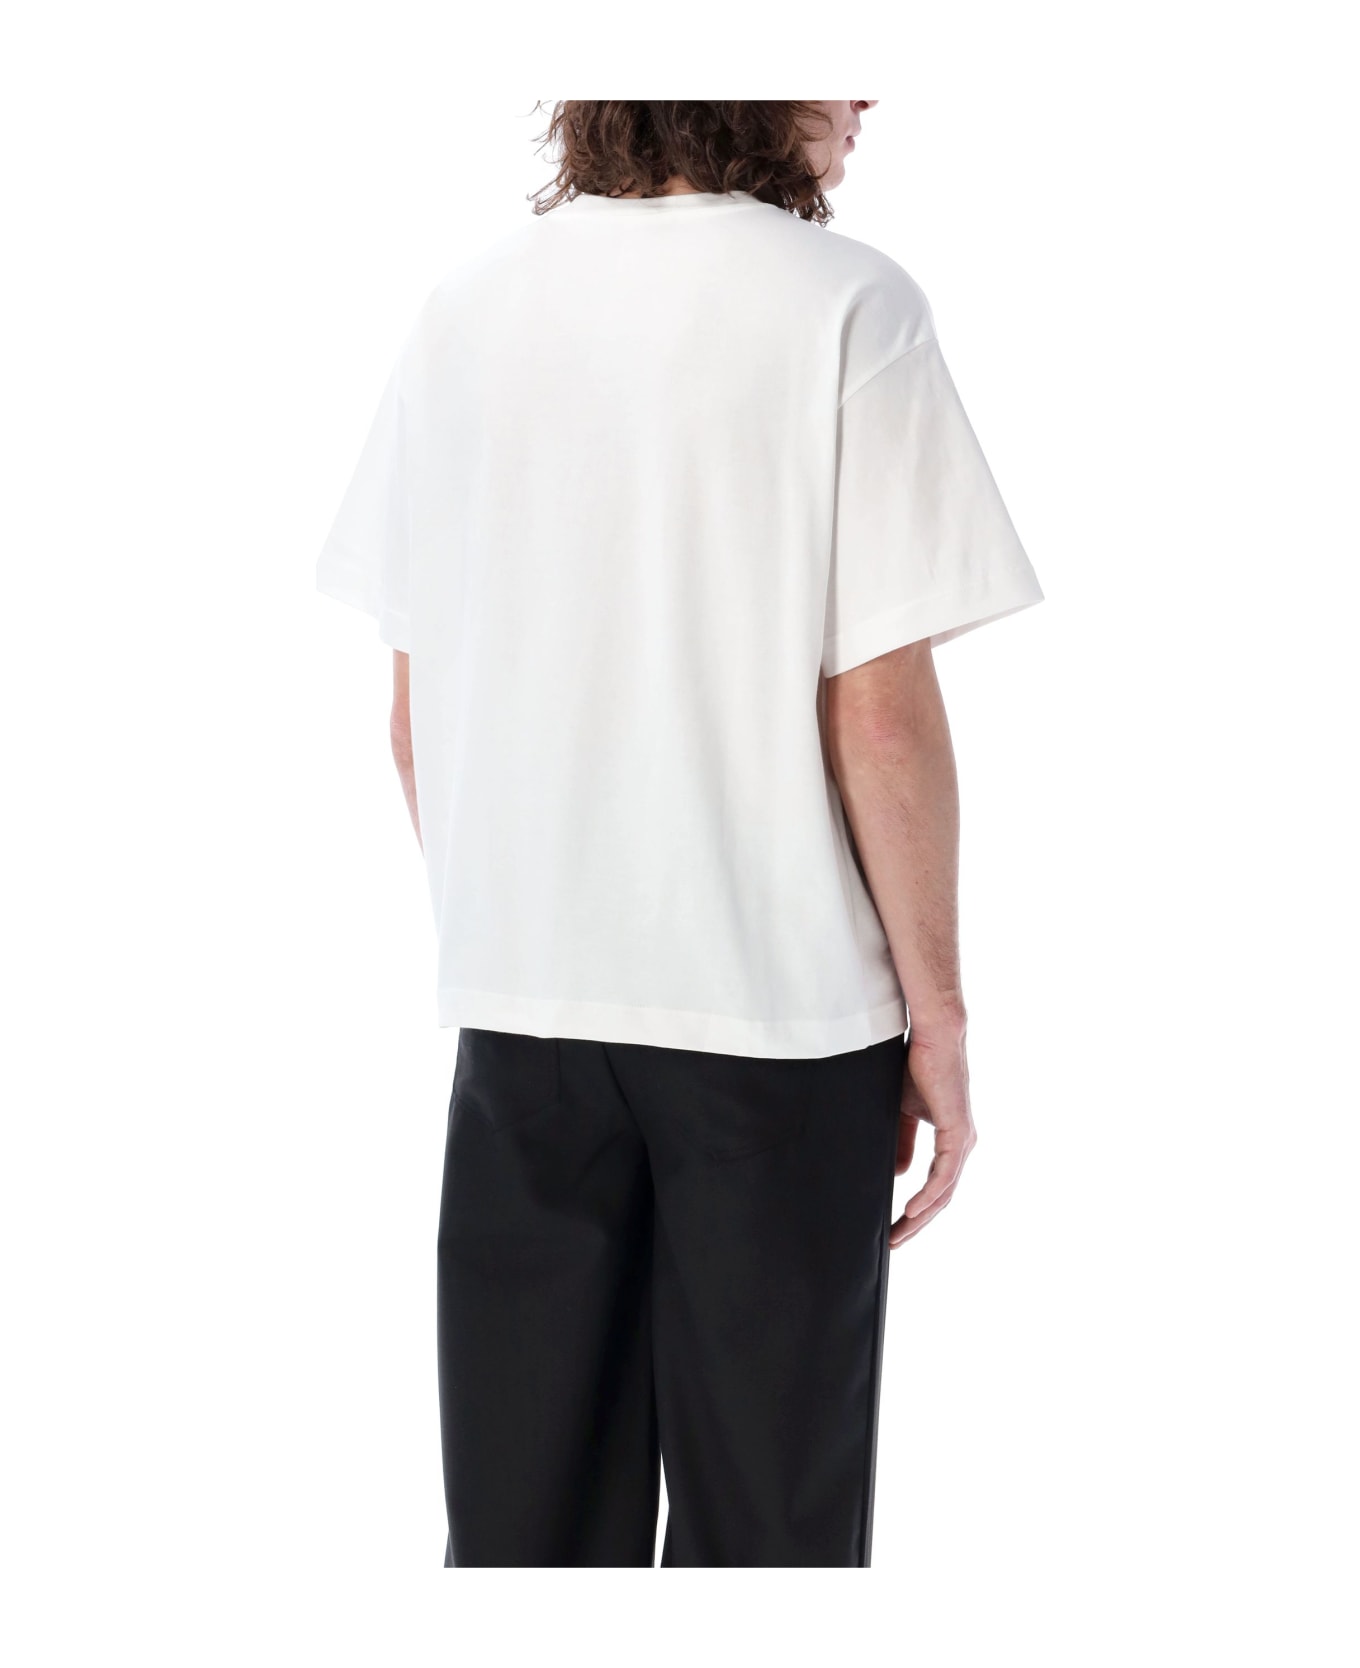 Séfr Atelier T-shirt - HEAVY WHITE COTTON